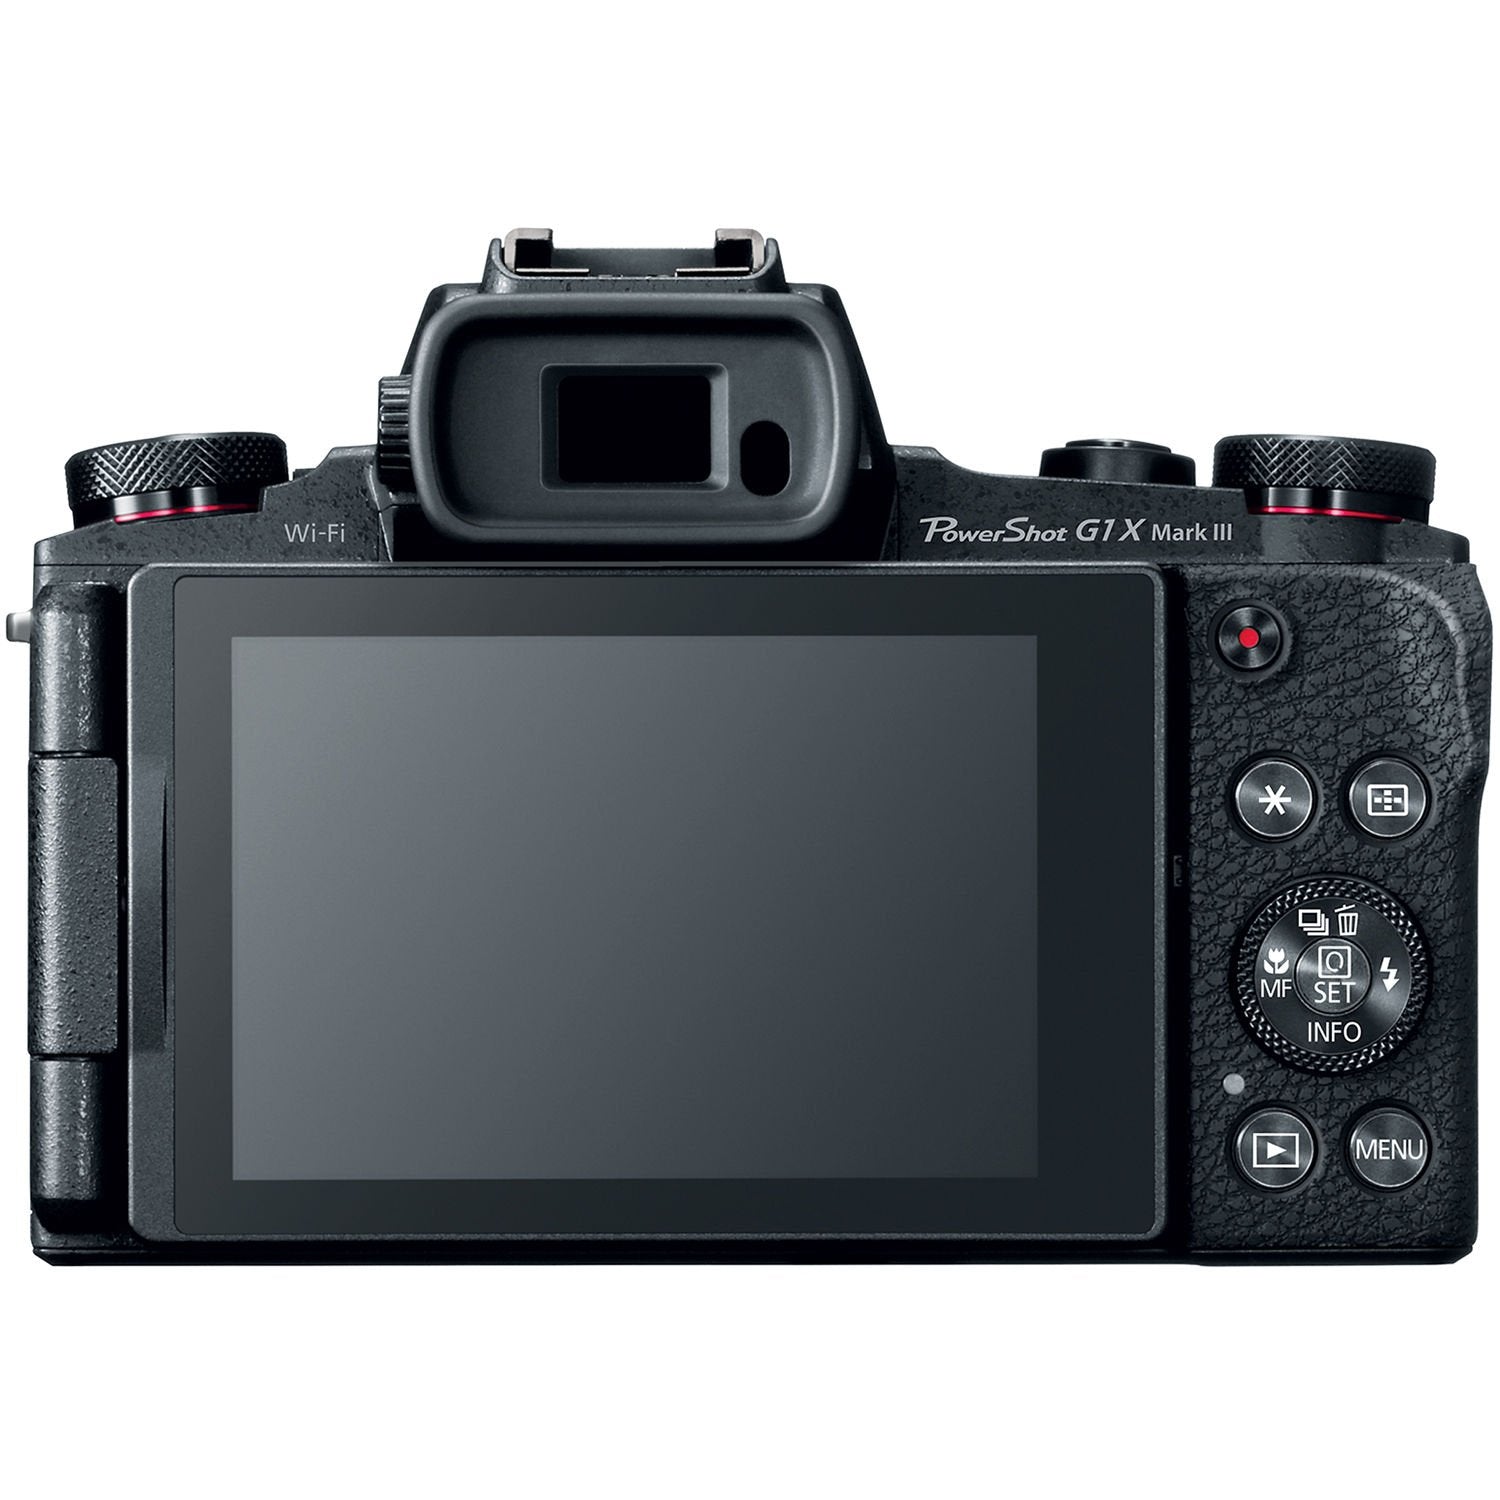 Canon PowerShot G1 X Mark III Digital Camera #2208C001 International Version (No Warranty) Starter Bundle